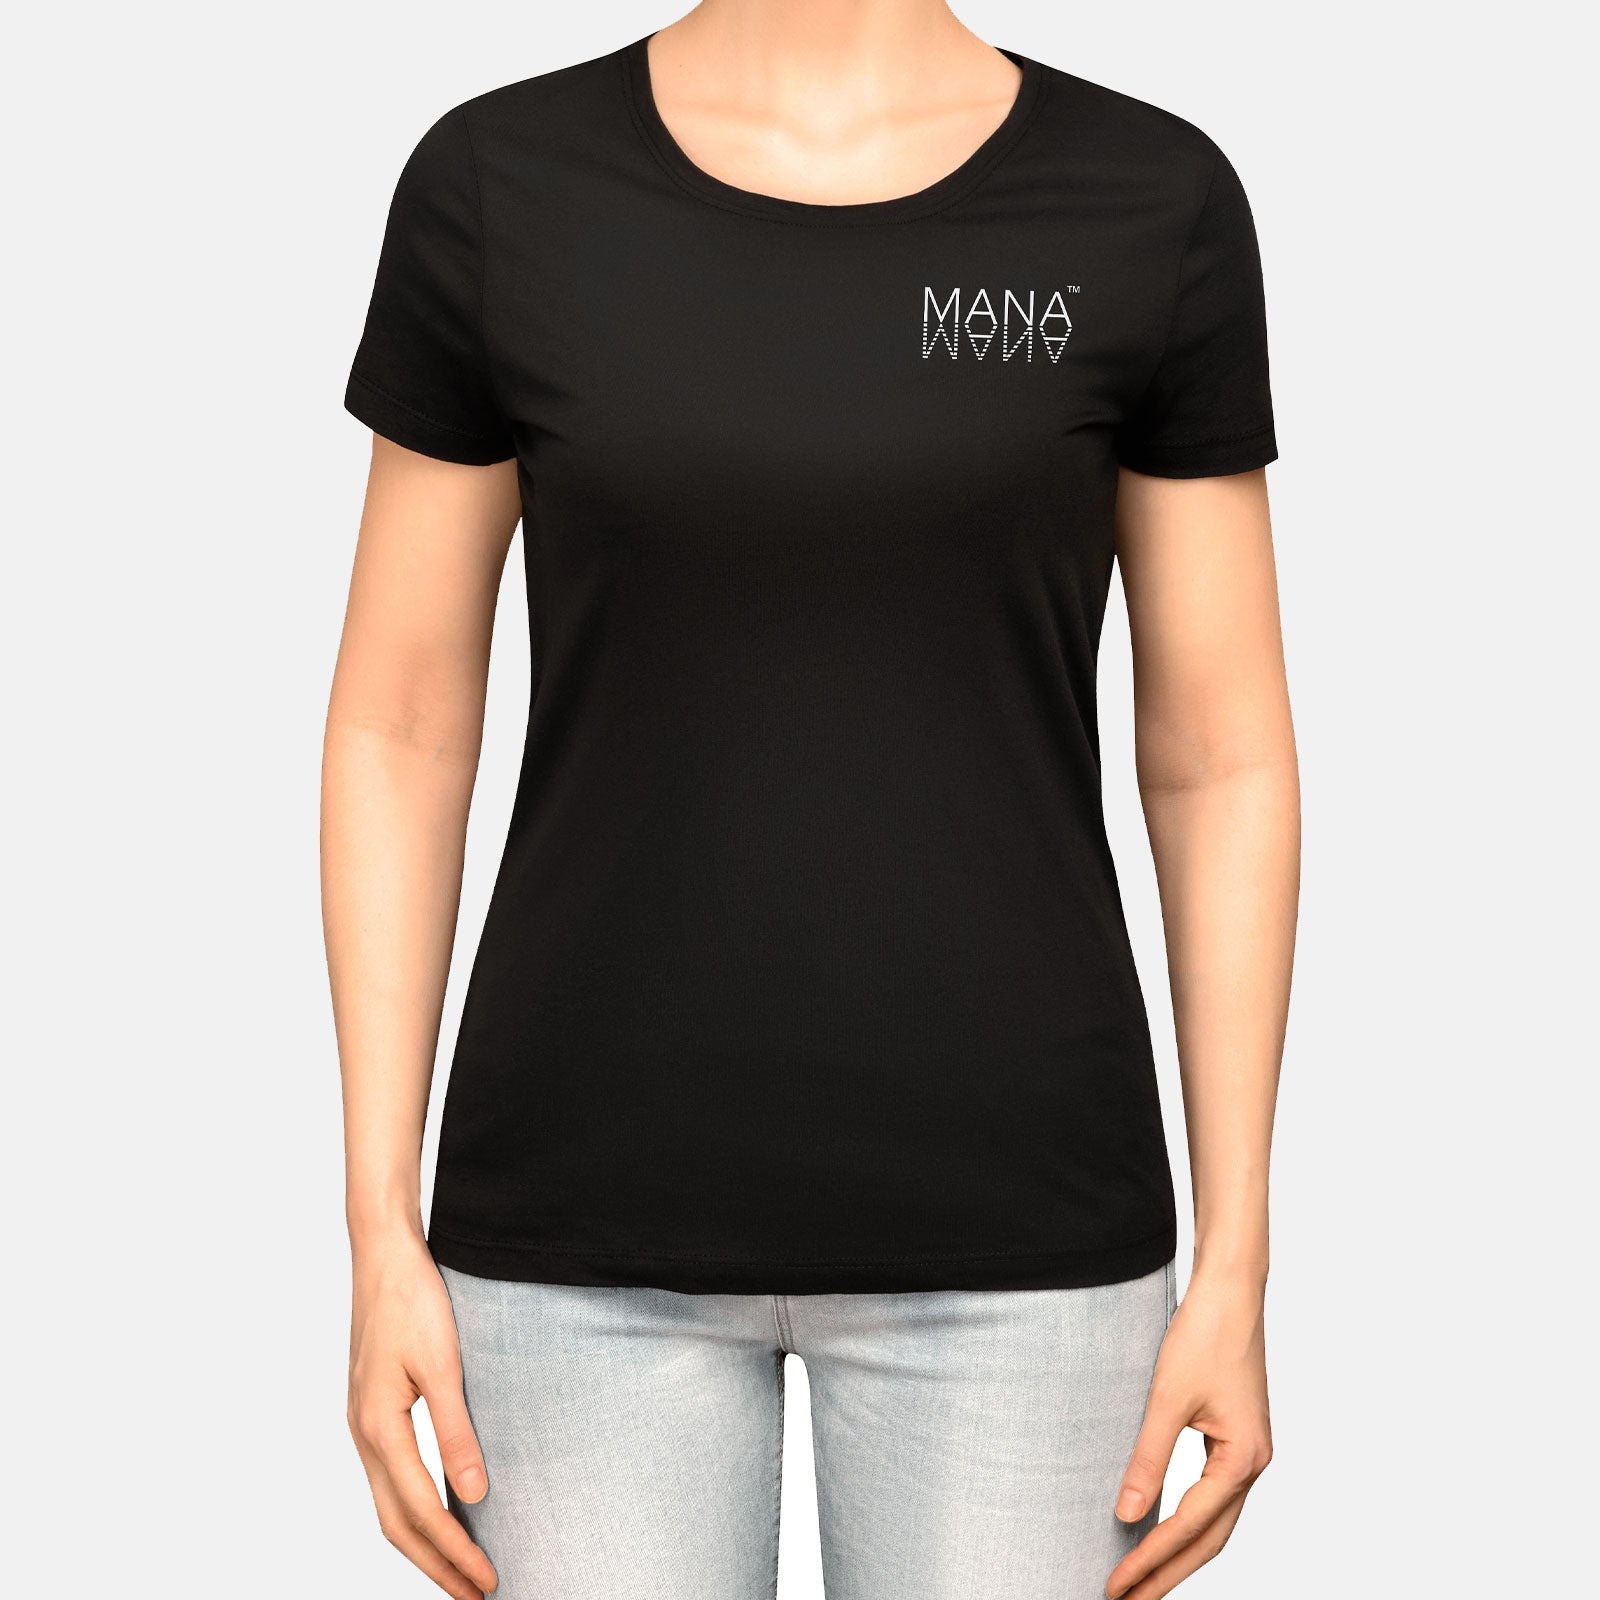 Mana™ Women's T-Shirt